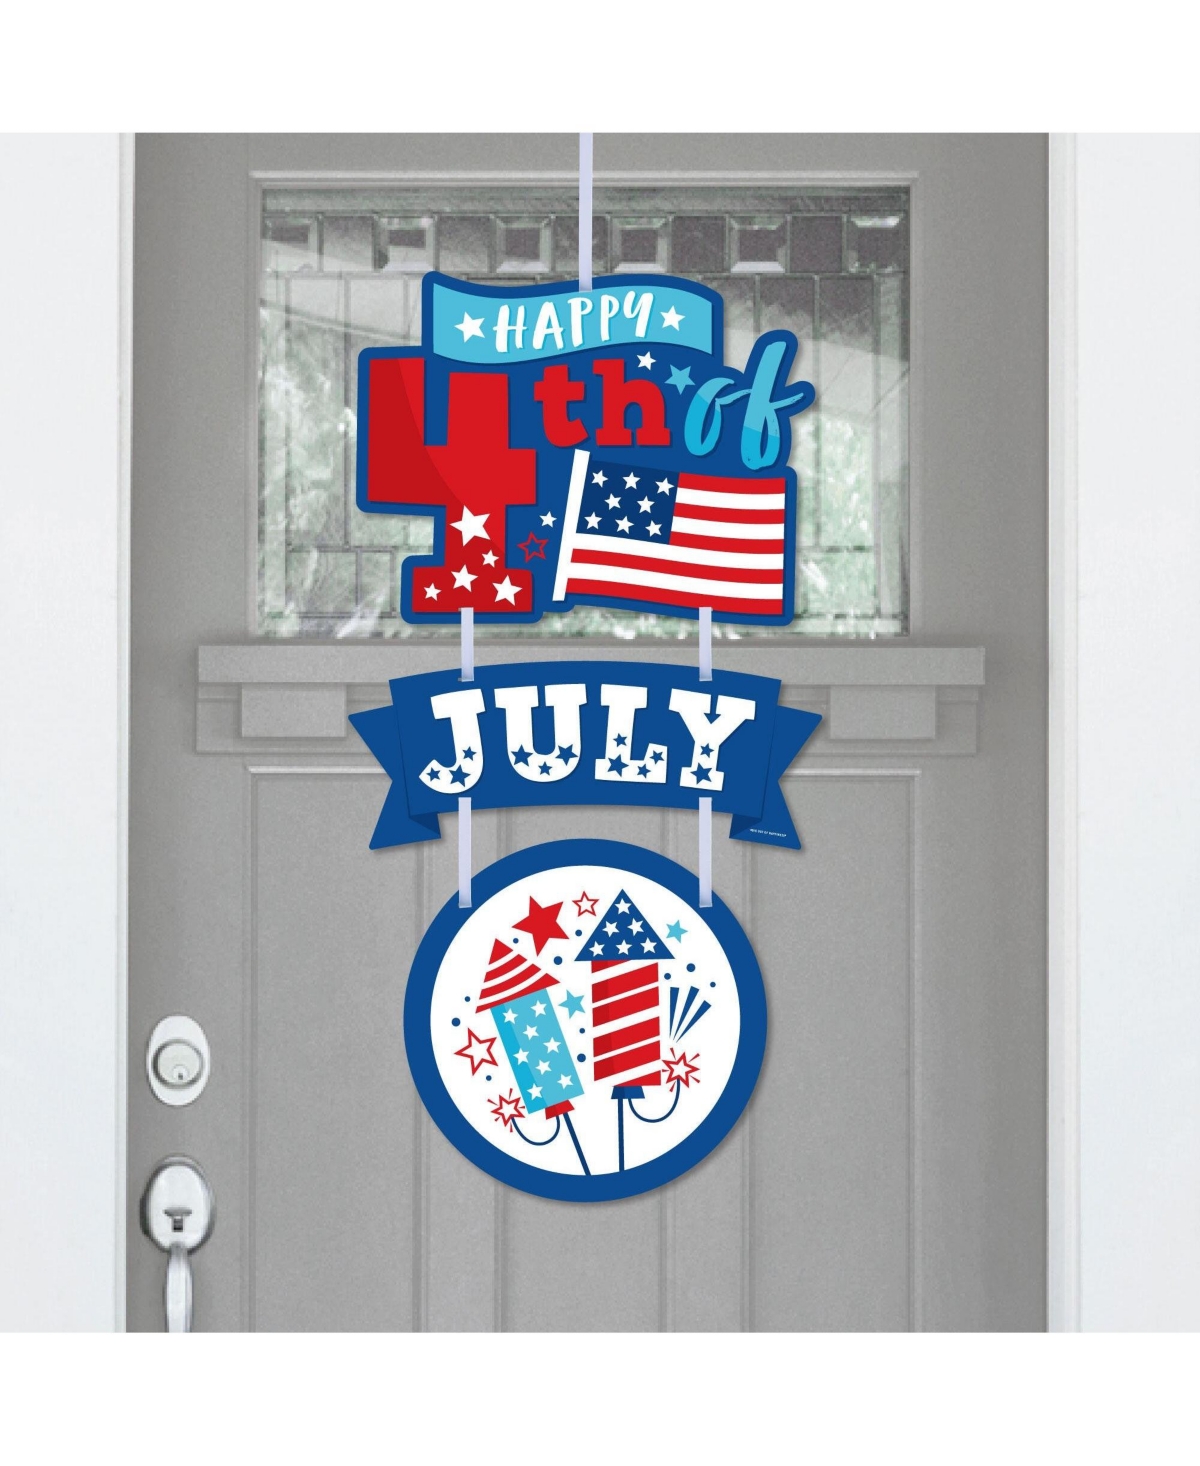 Firecracker 4th of July - Hanging Porch Outdoor Front Door Decor - 3 Piece Sign